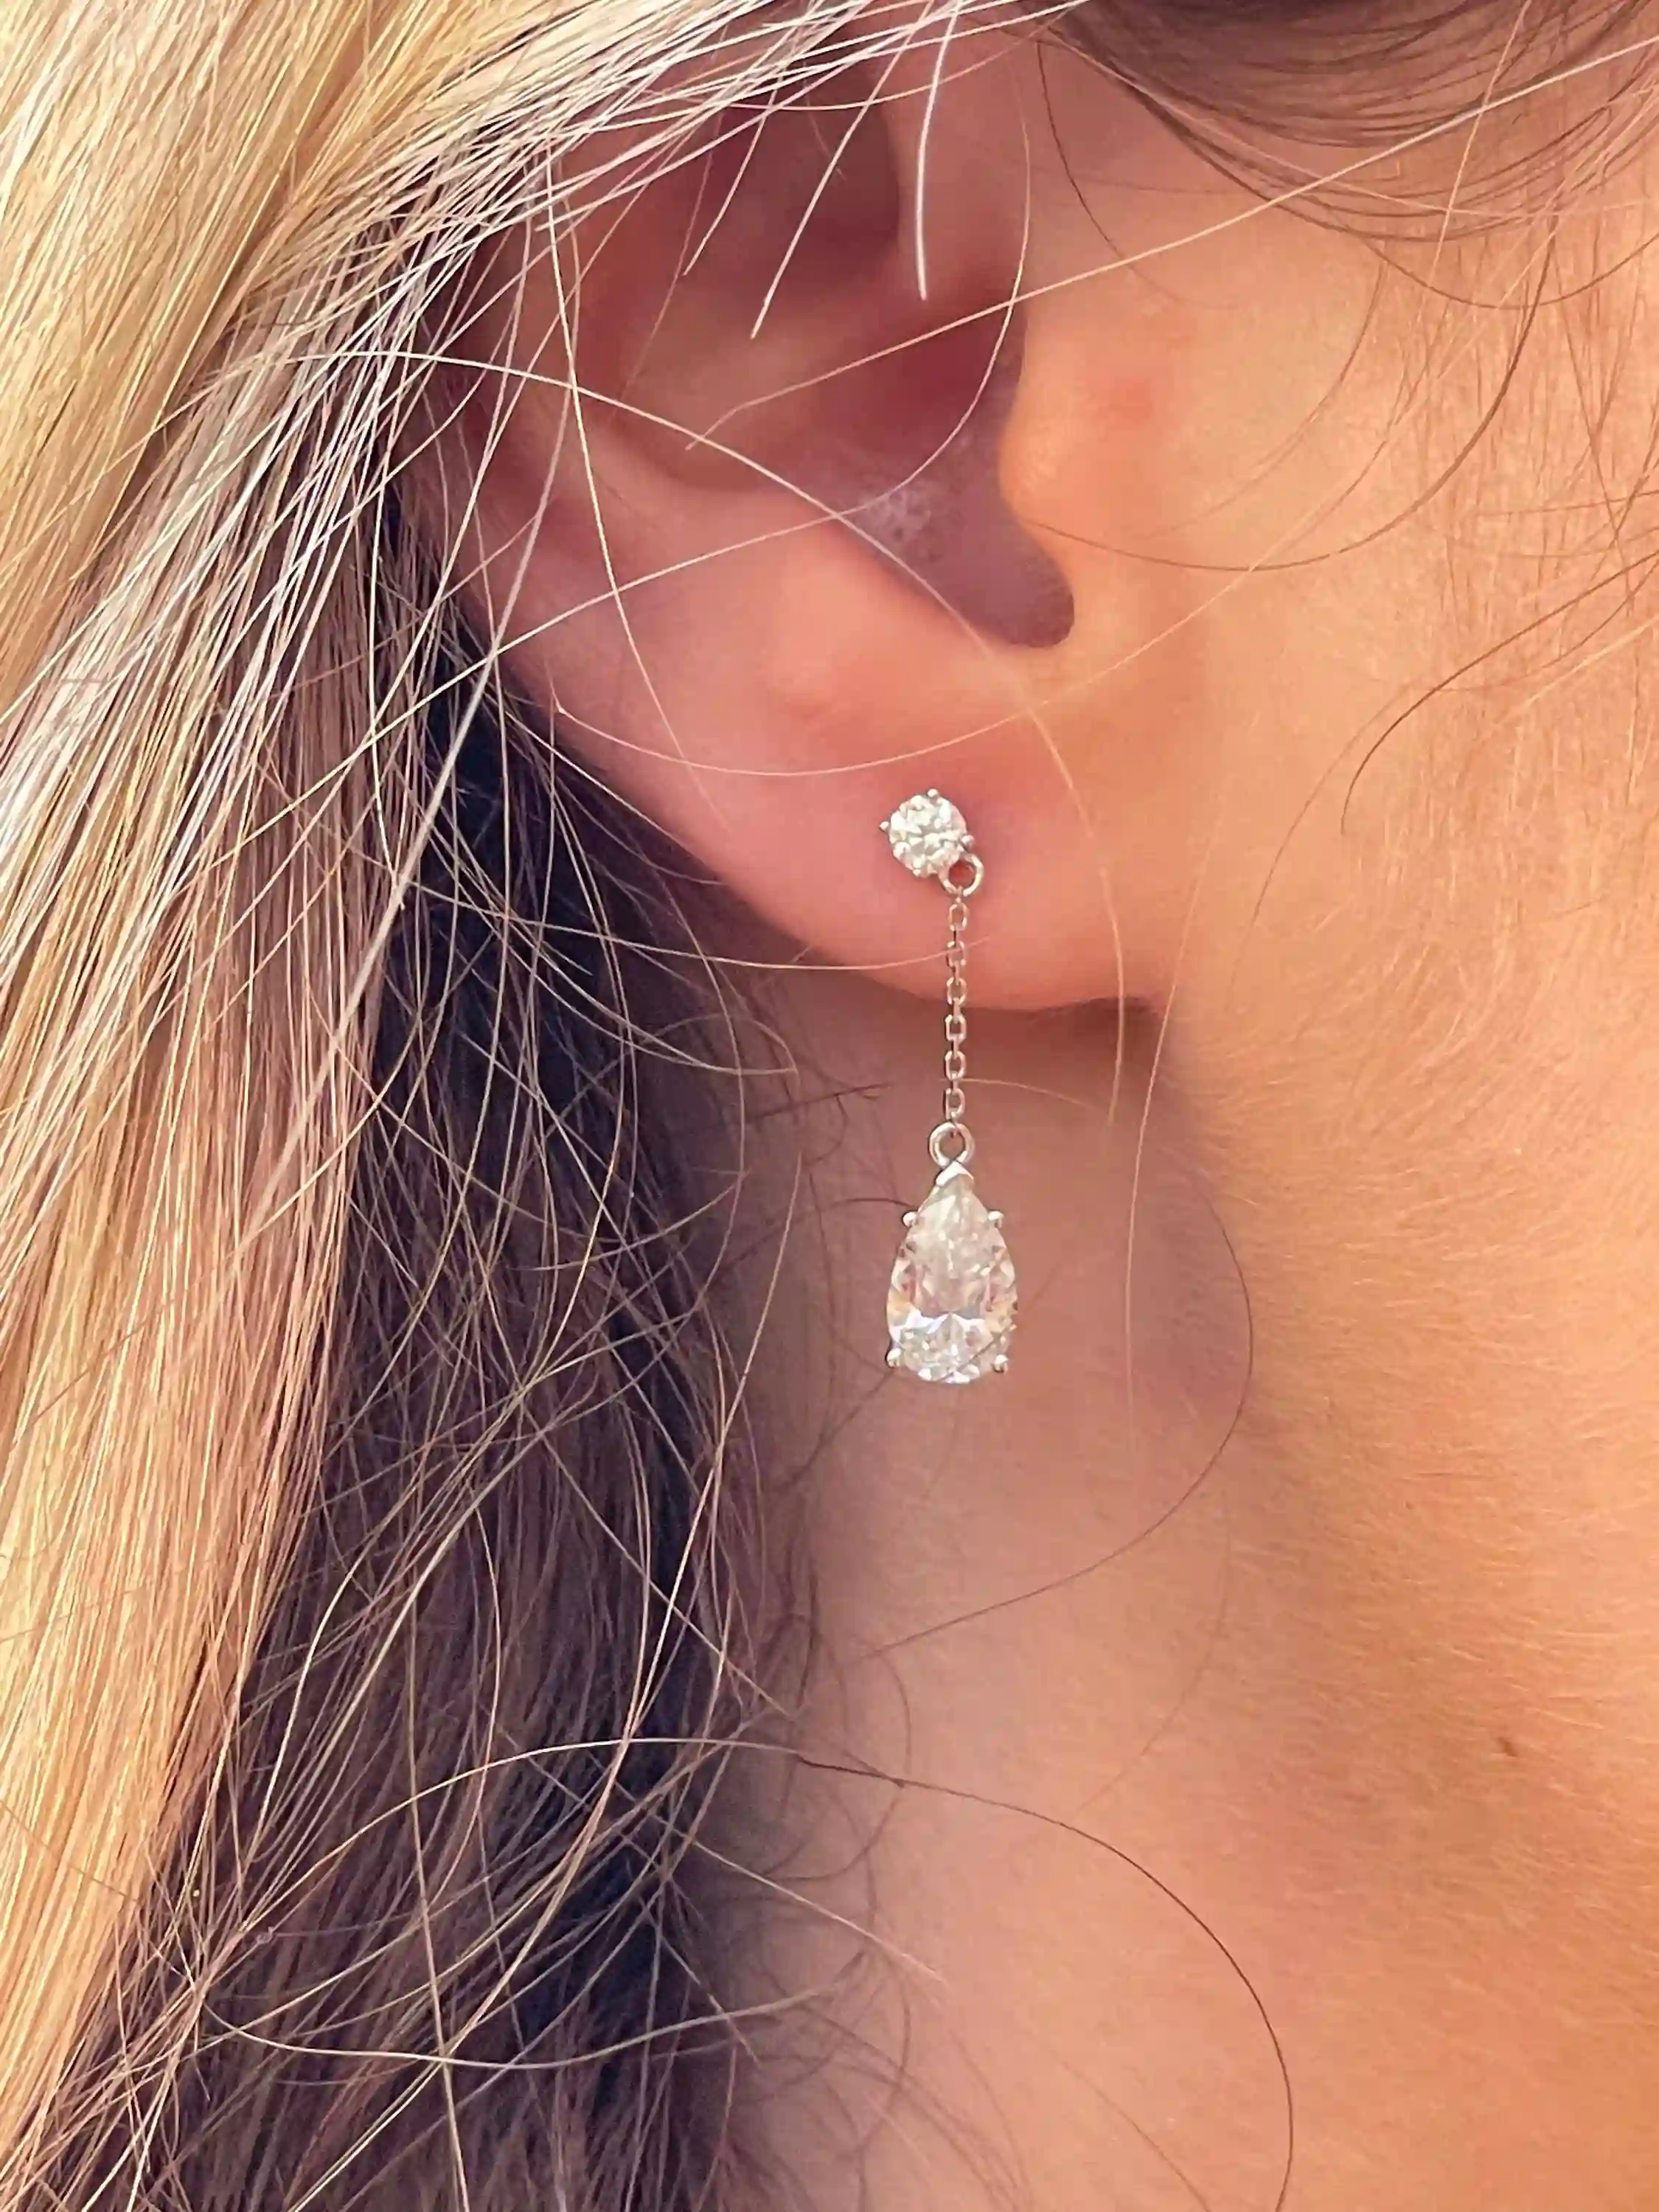 Solid Gold 18k Diamond Earrings Tear Drop Diamond Earrings Dangle Diamond Drop Earrings Daughter Bridal Shower Gift 2 ct Solitaire Diamond 